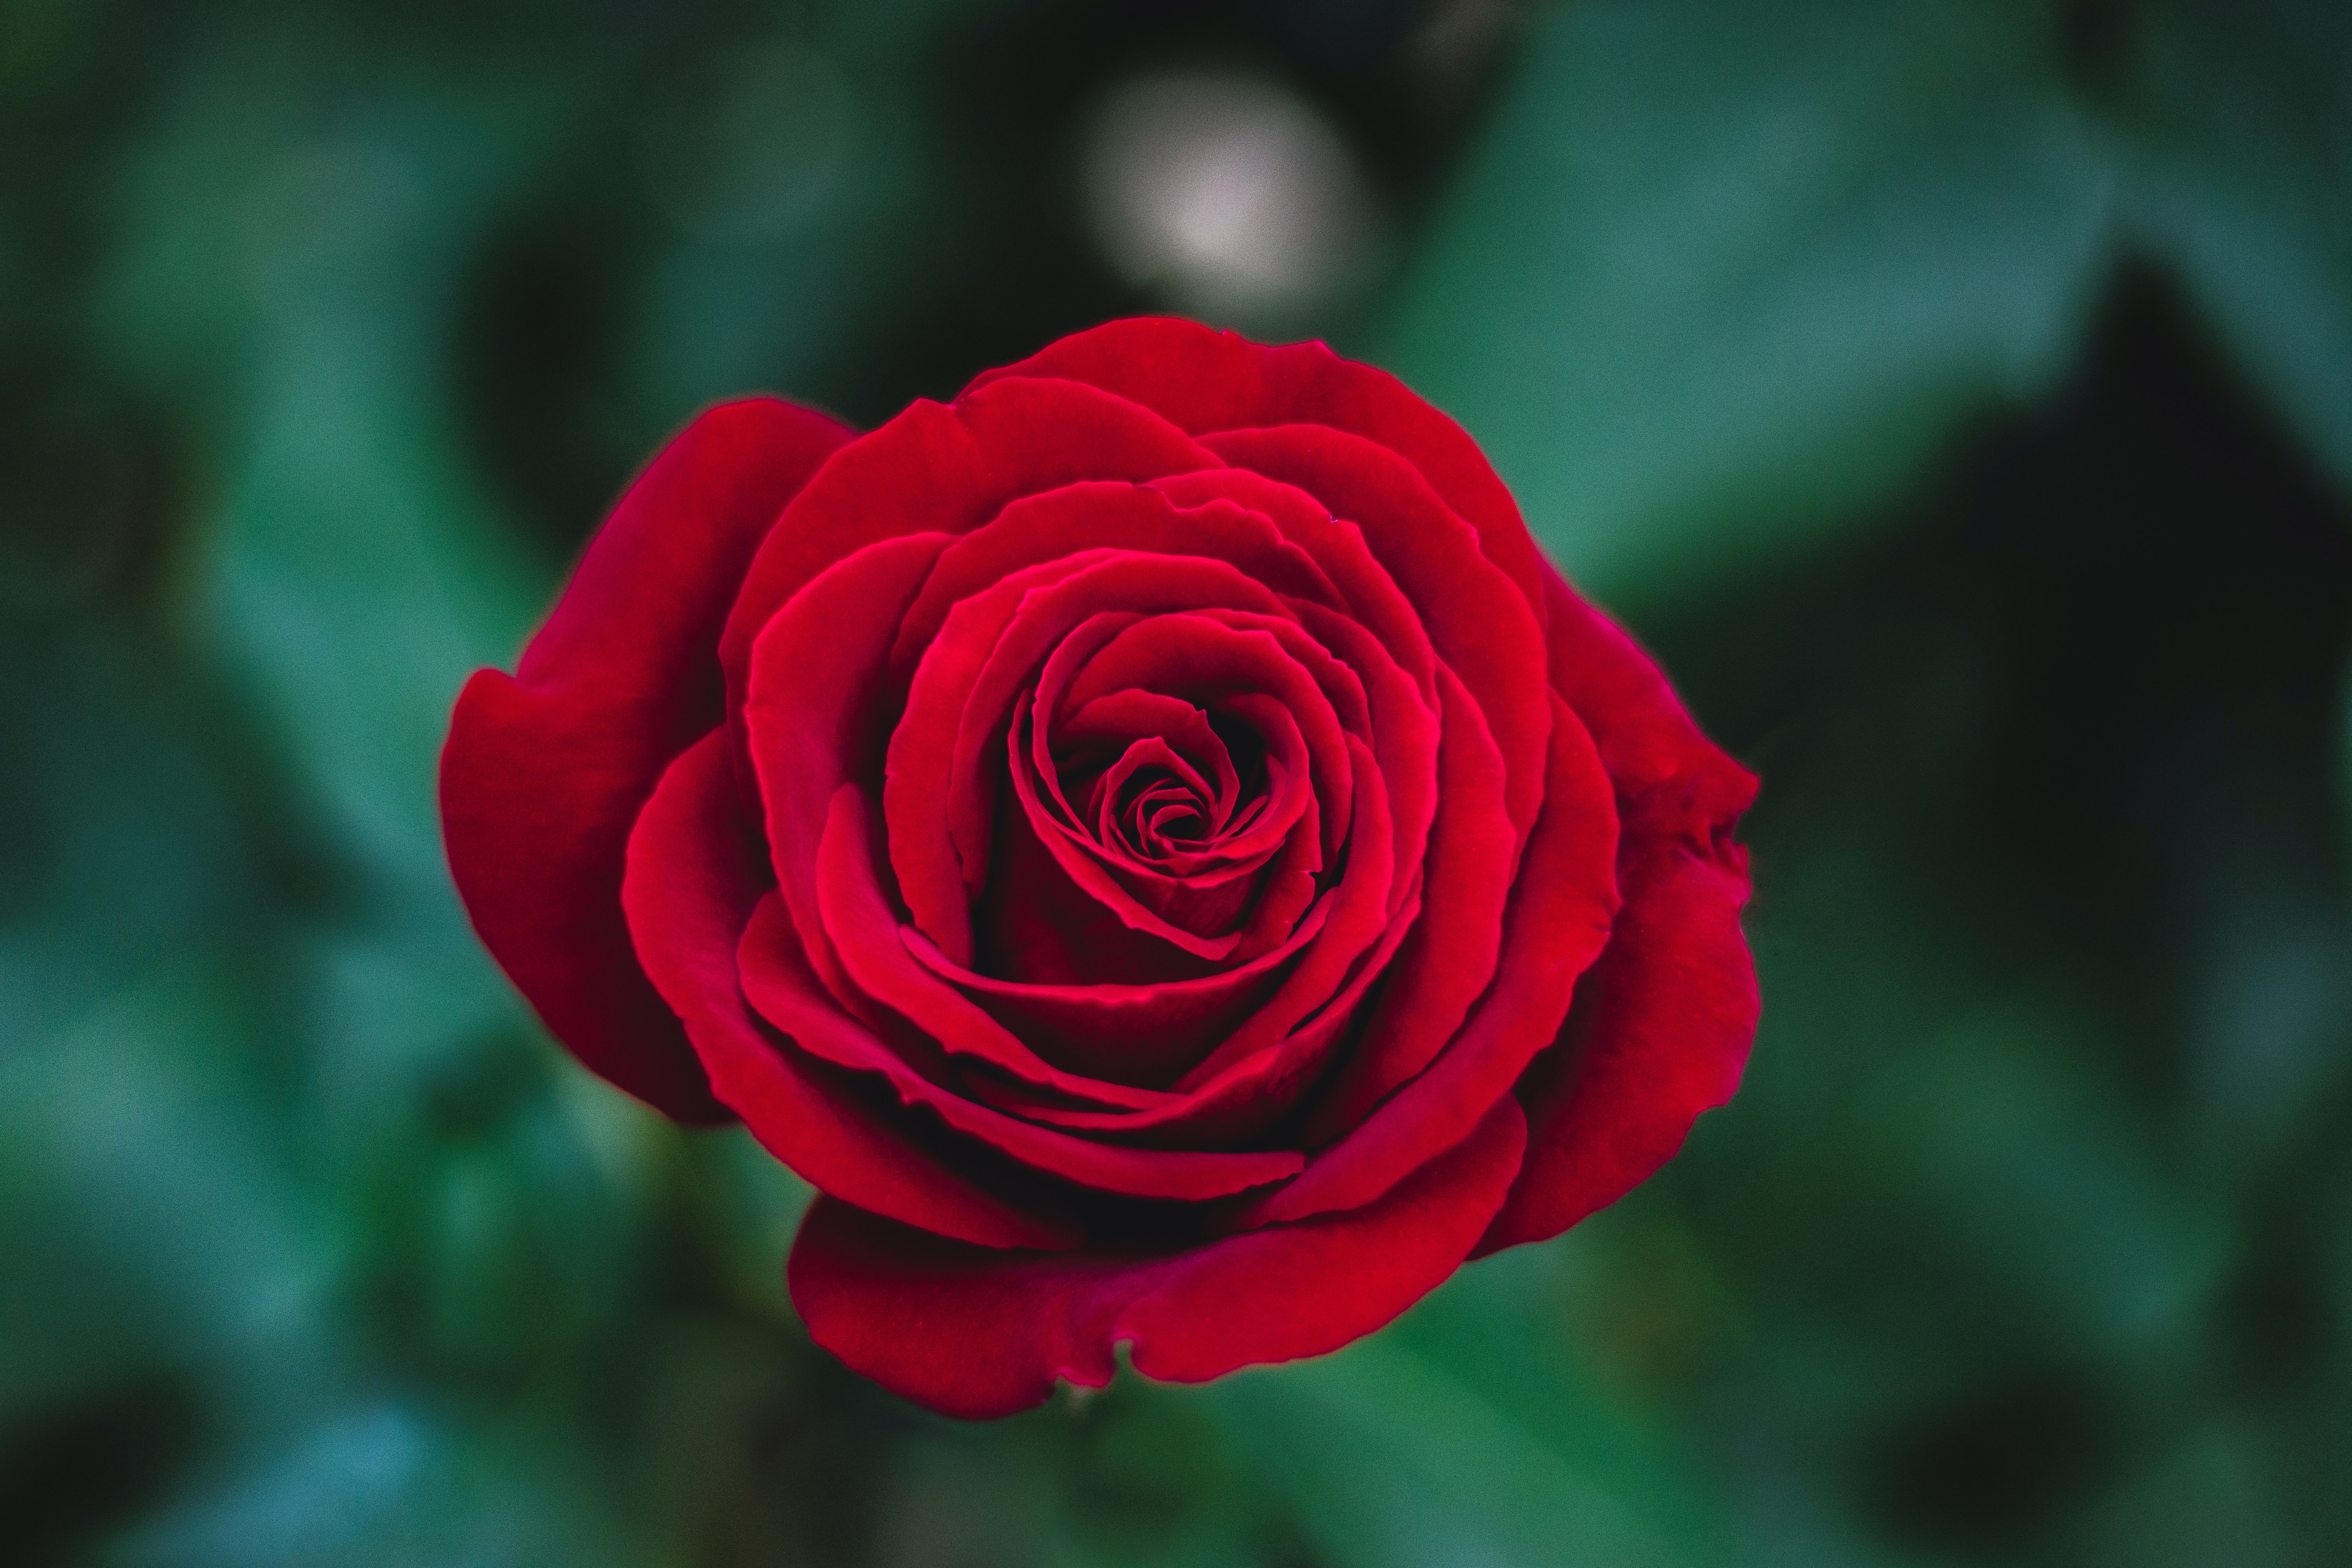 On puc comprar roses de Sant Jordi online?